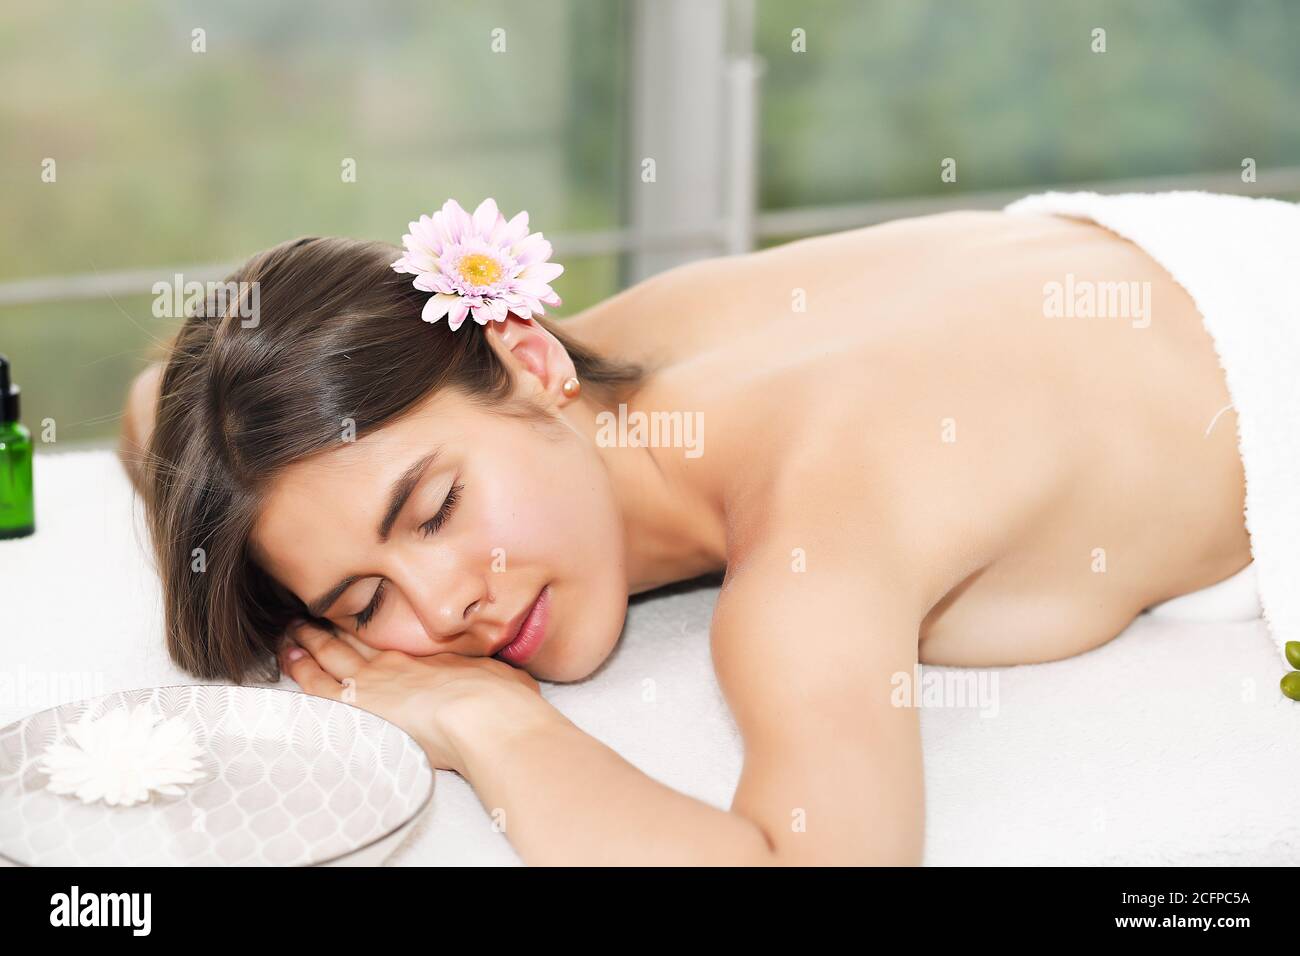 Body care. Spa body massage european women hands treatment. Woman having massage in spa Stock Photo